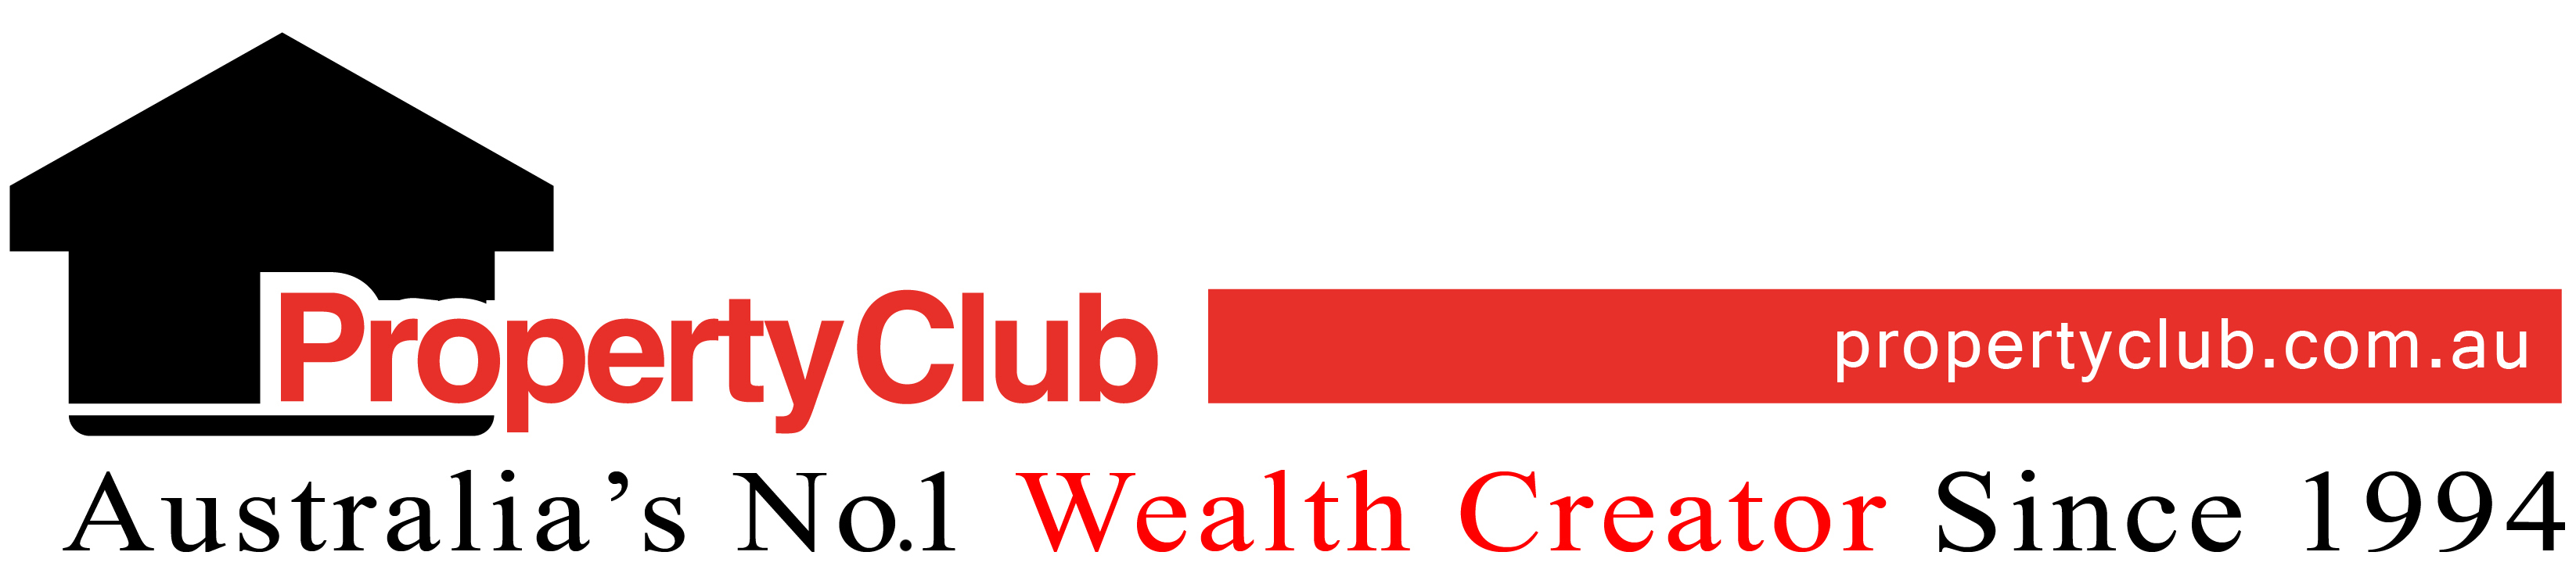 property club banner